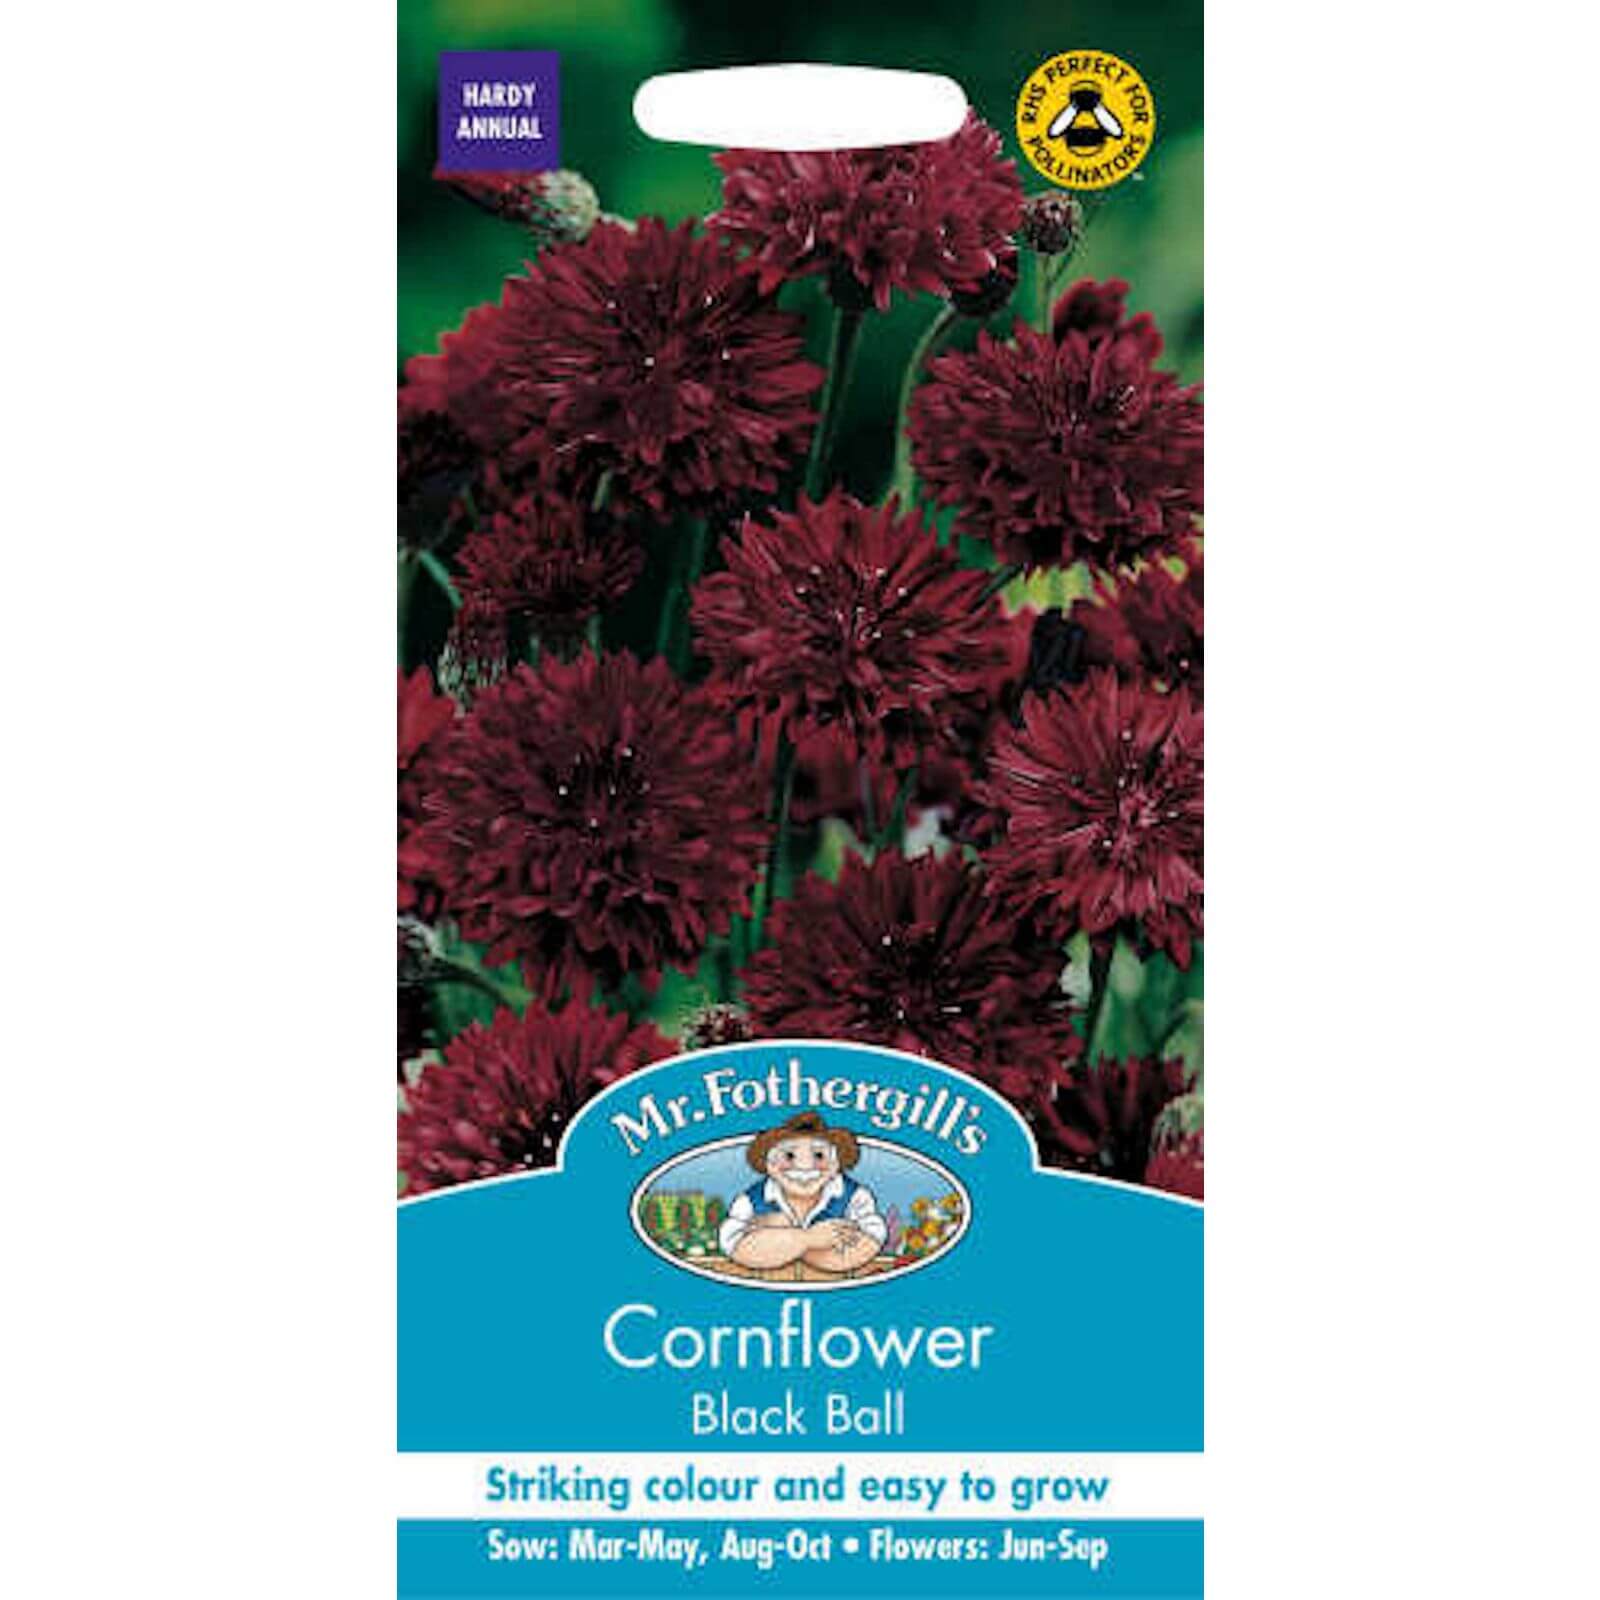 Mr. Fothergill's Cornflower Black Ball (Centaurea Cyanus) Seeds